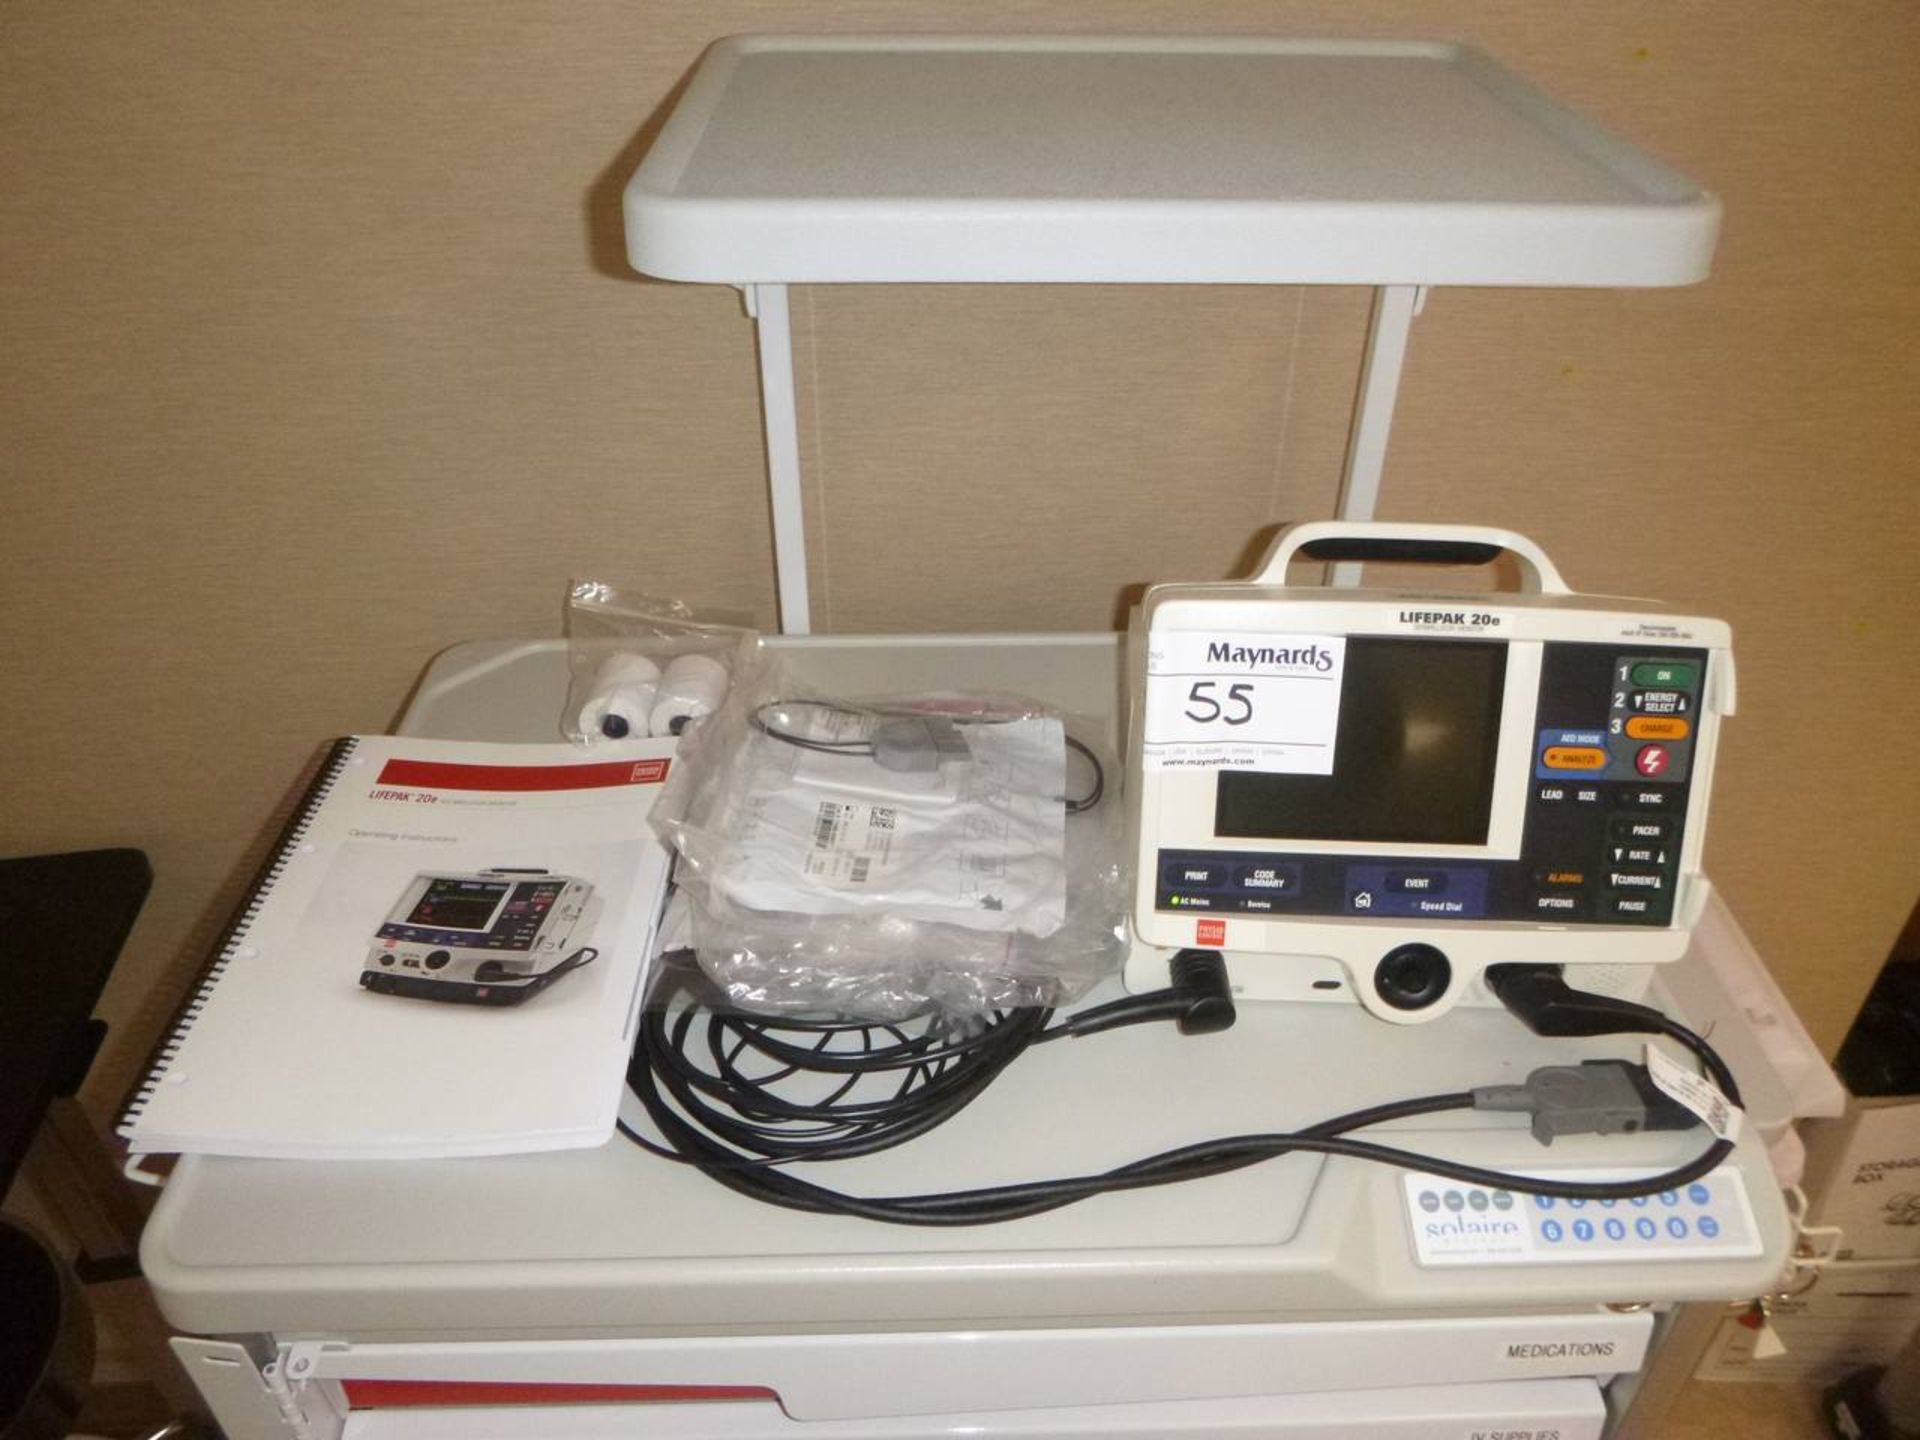 Lifepak 20e Defibrillator/monitor system